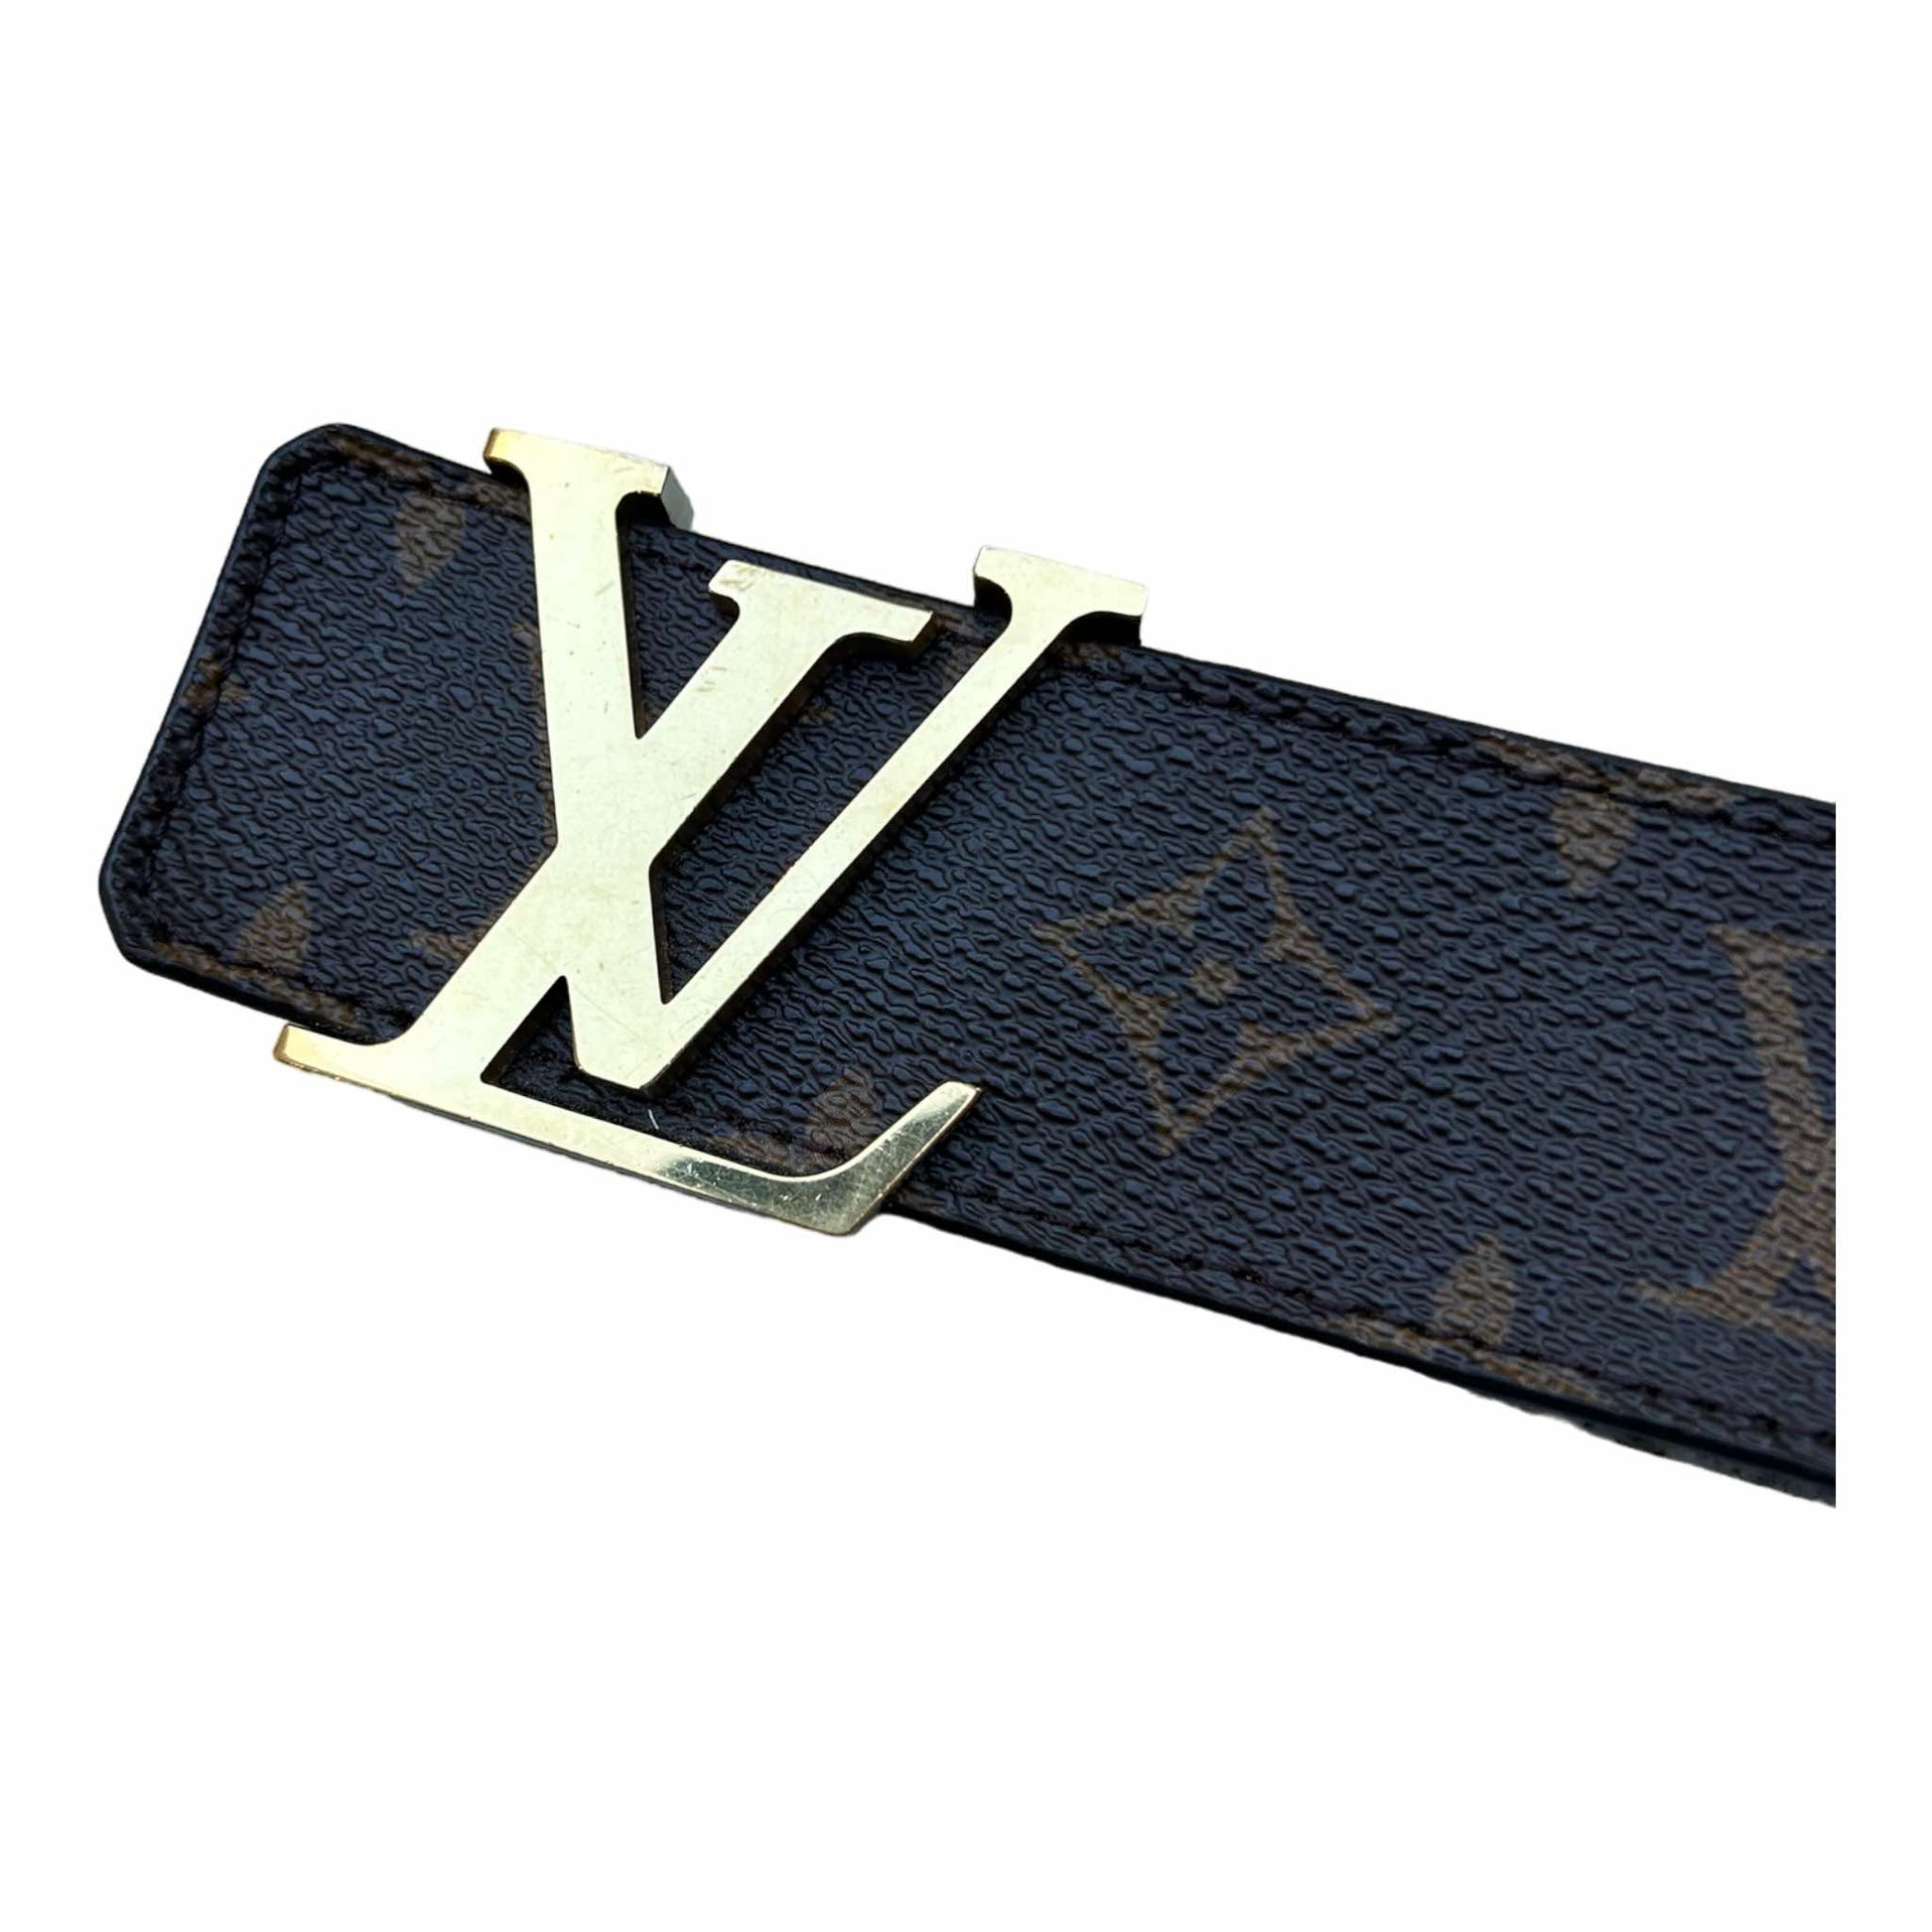 Louis Vuitton Initials Monogram Belt (90/36) - M9608